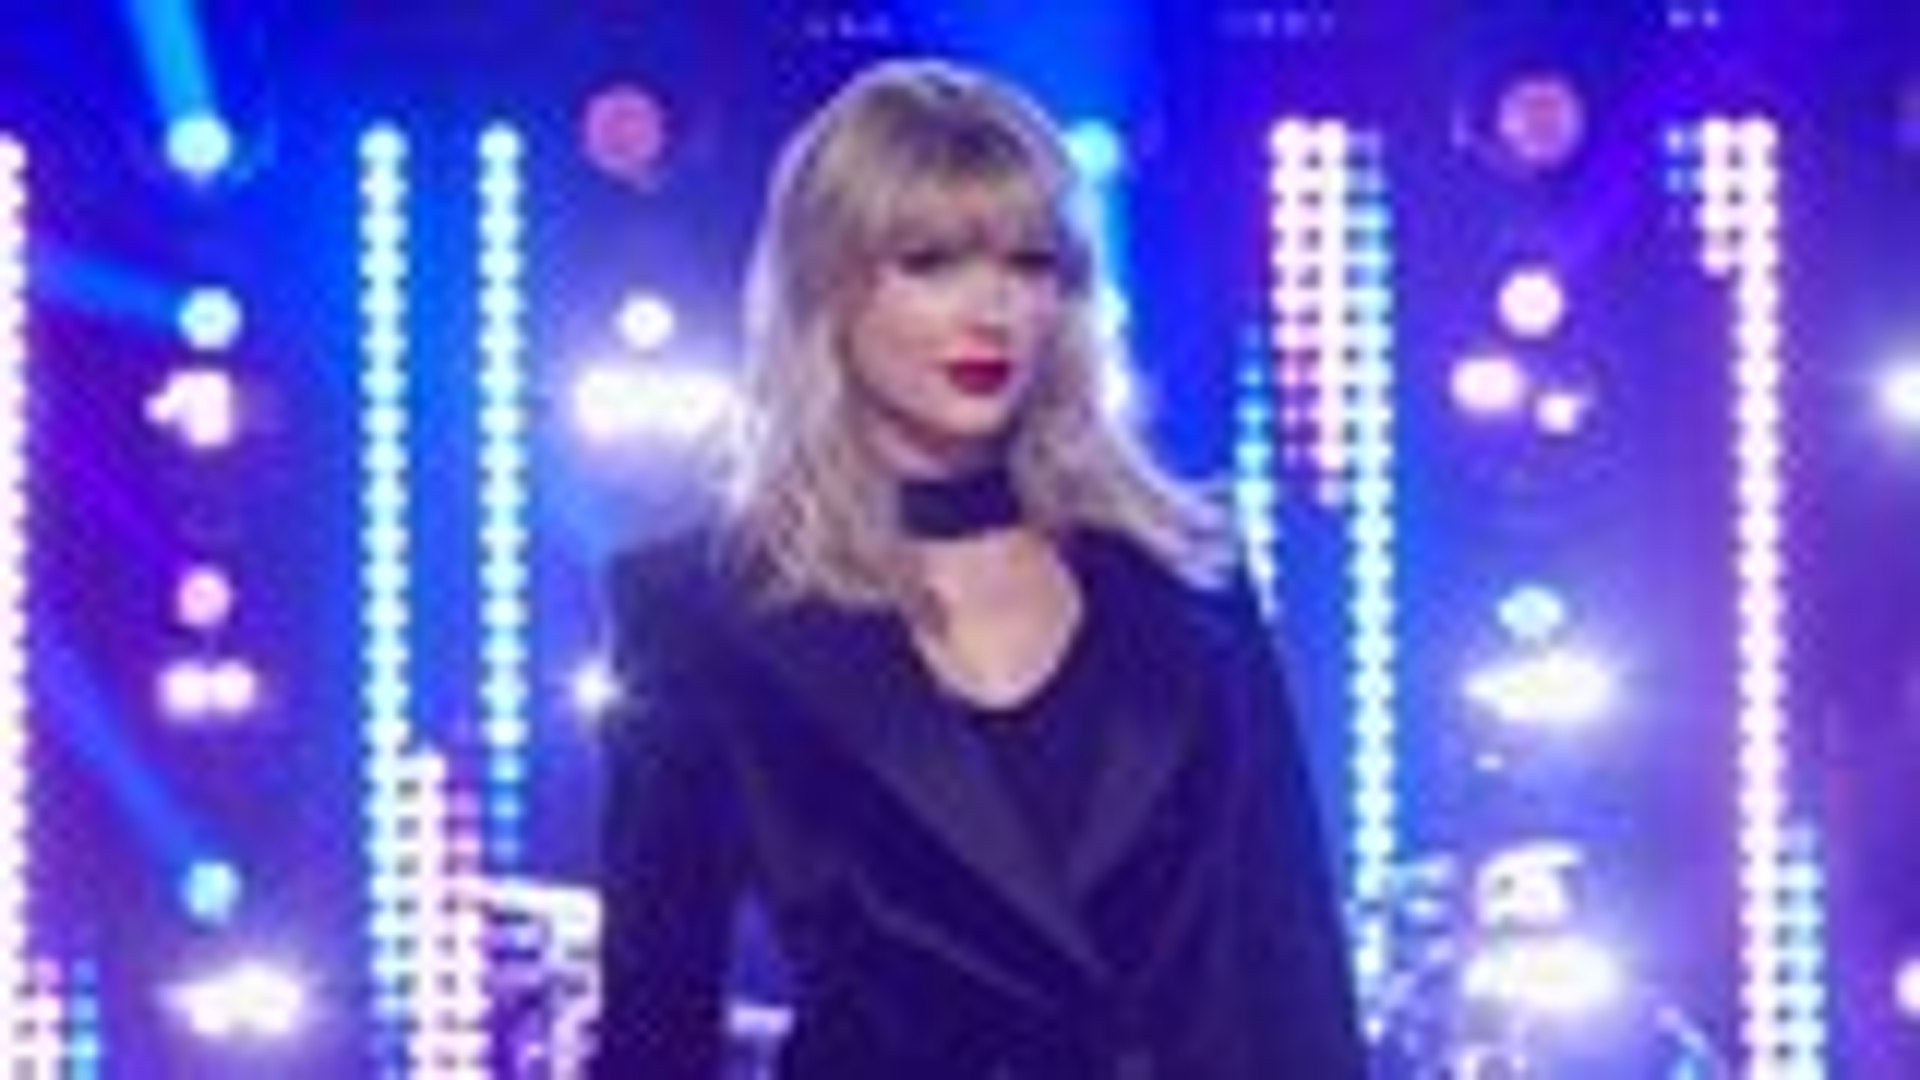 'The Voice': Taylor Swift Returns as Mega Mentor for Season 17 | THR News